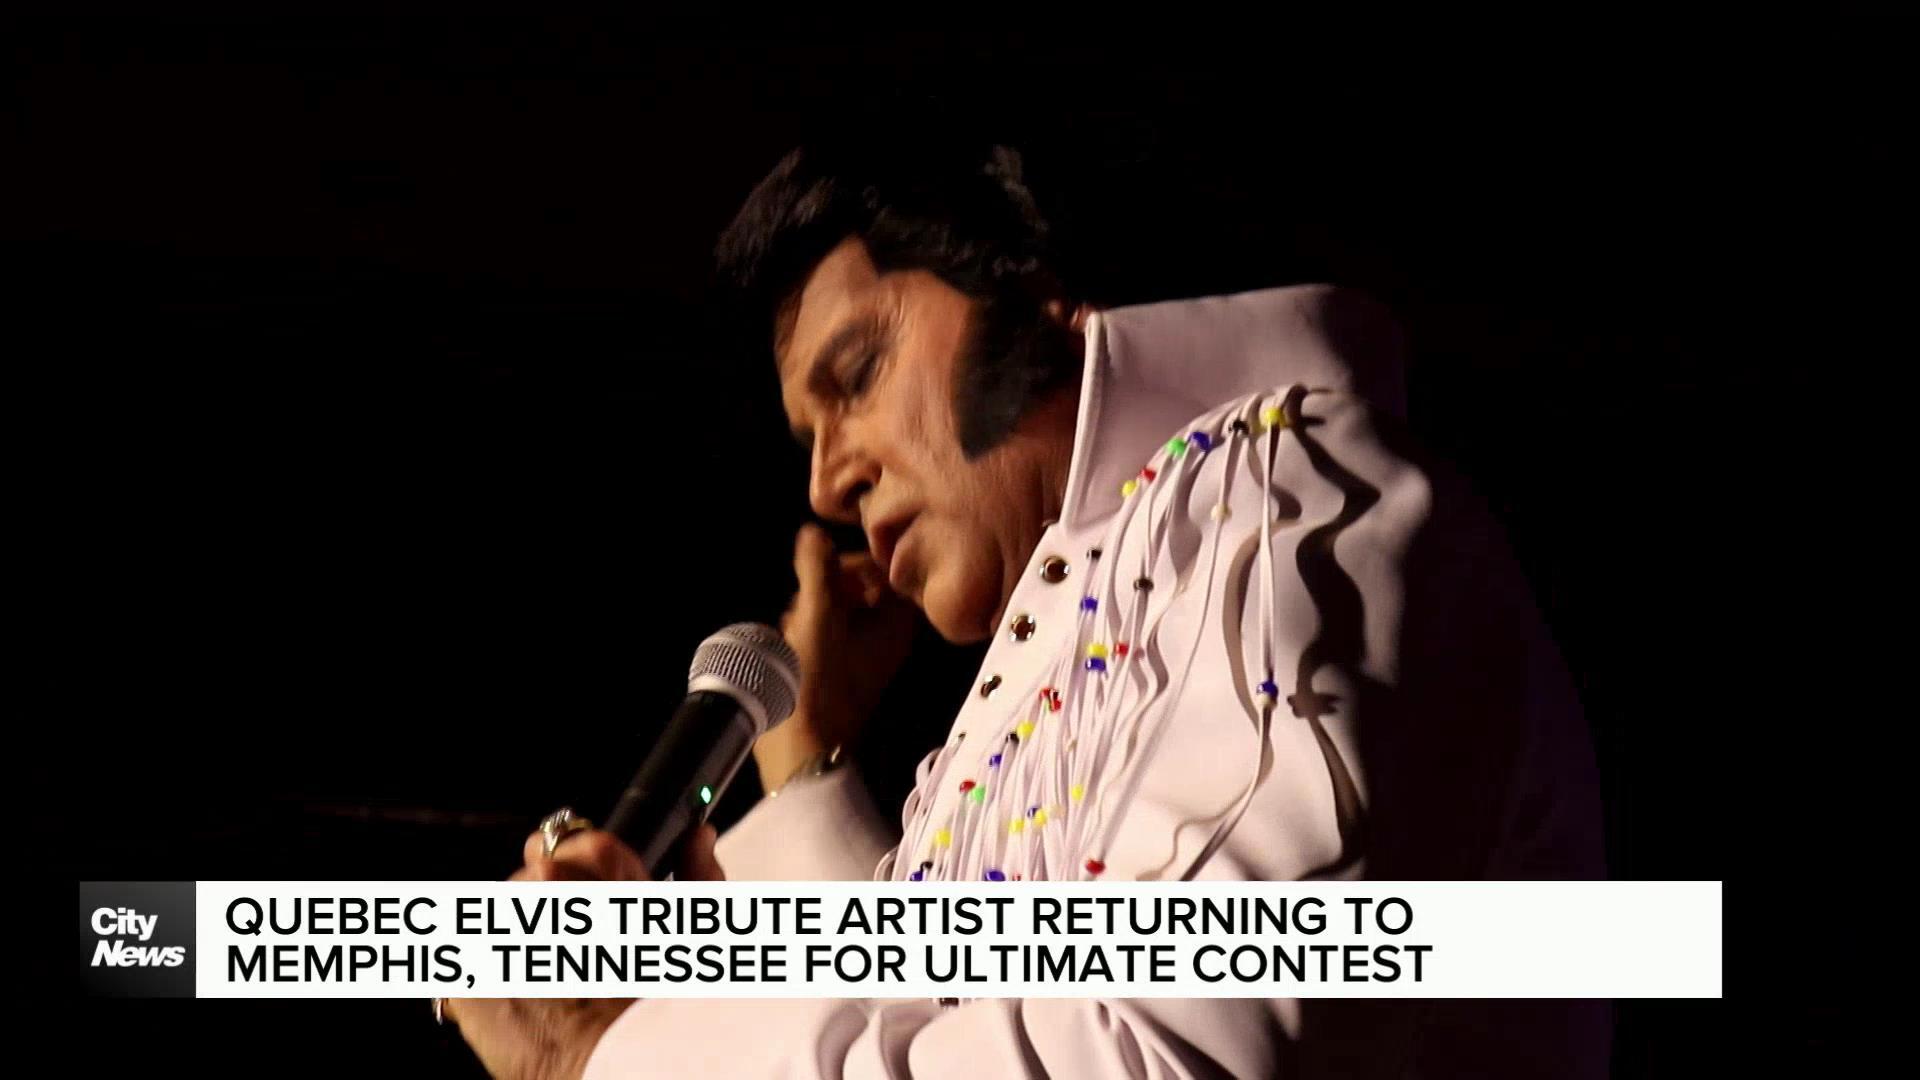 Quebec Elvis tribute artist returning to Memphis for ultimate contest